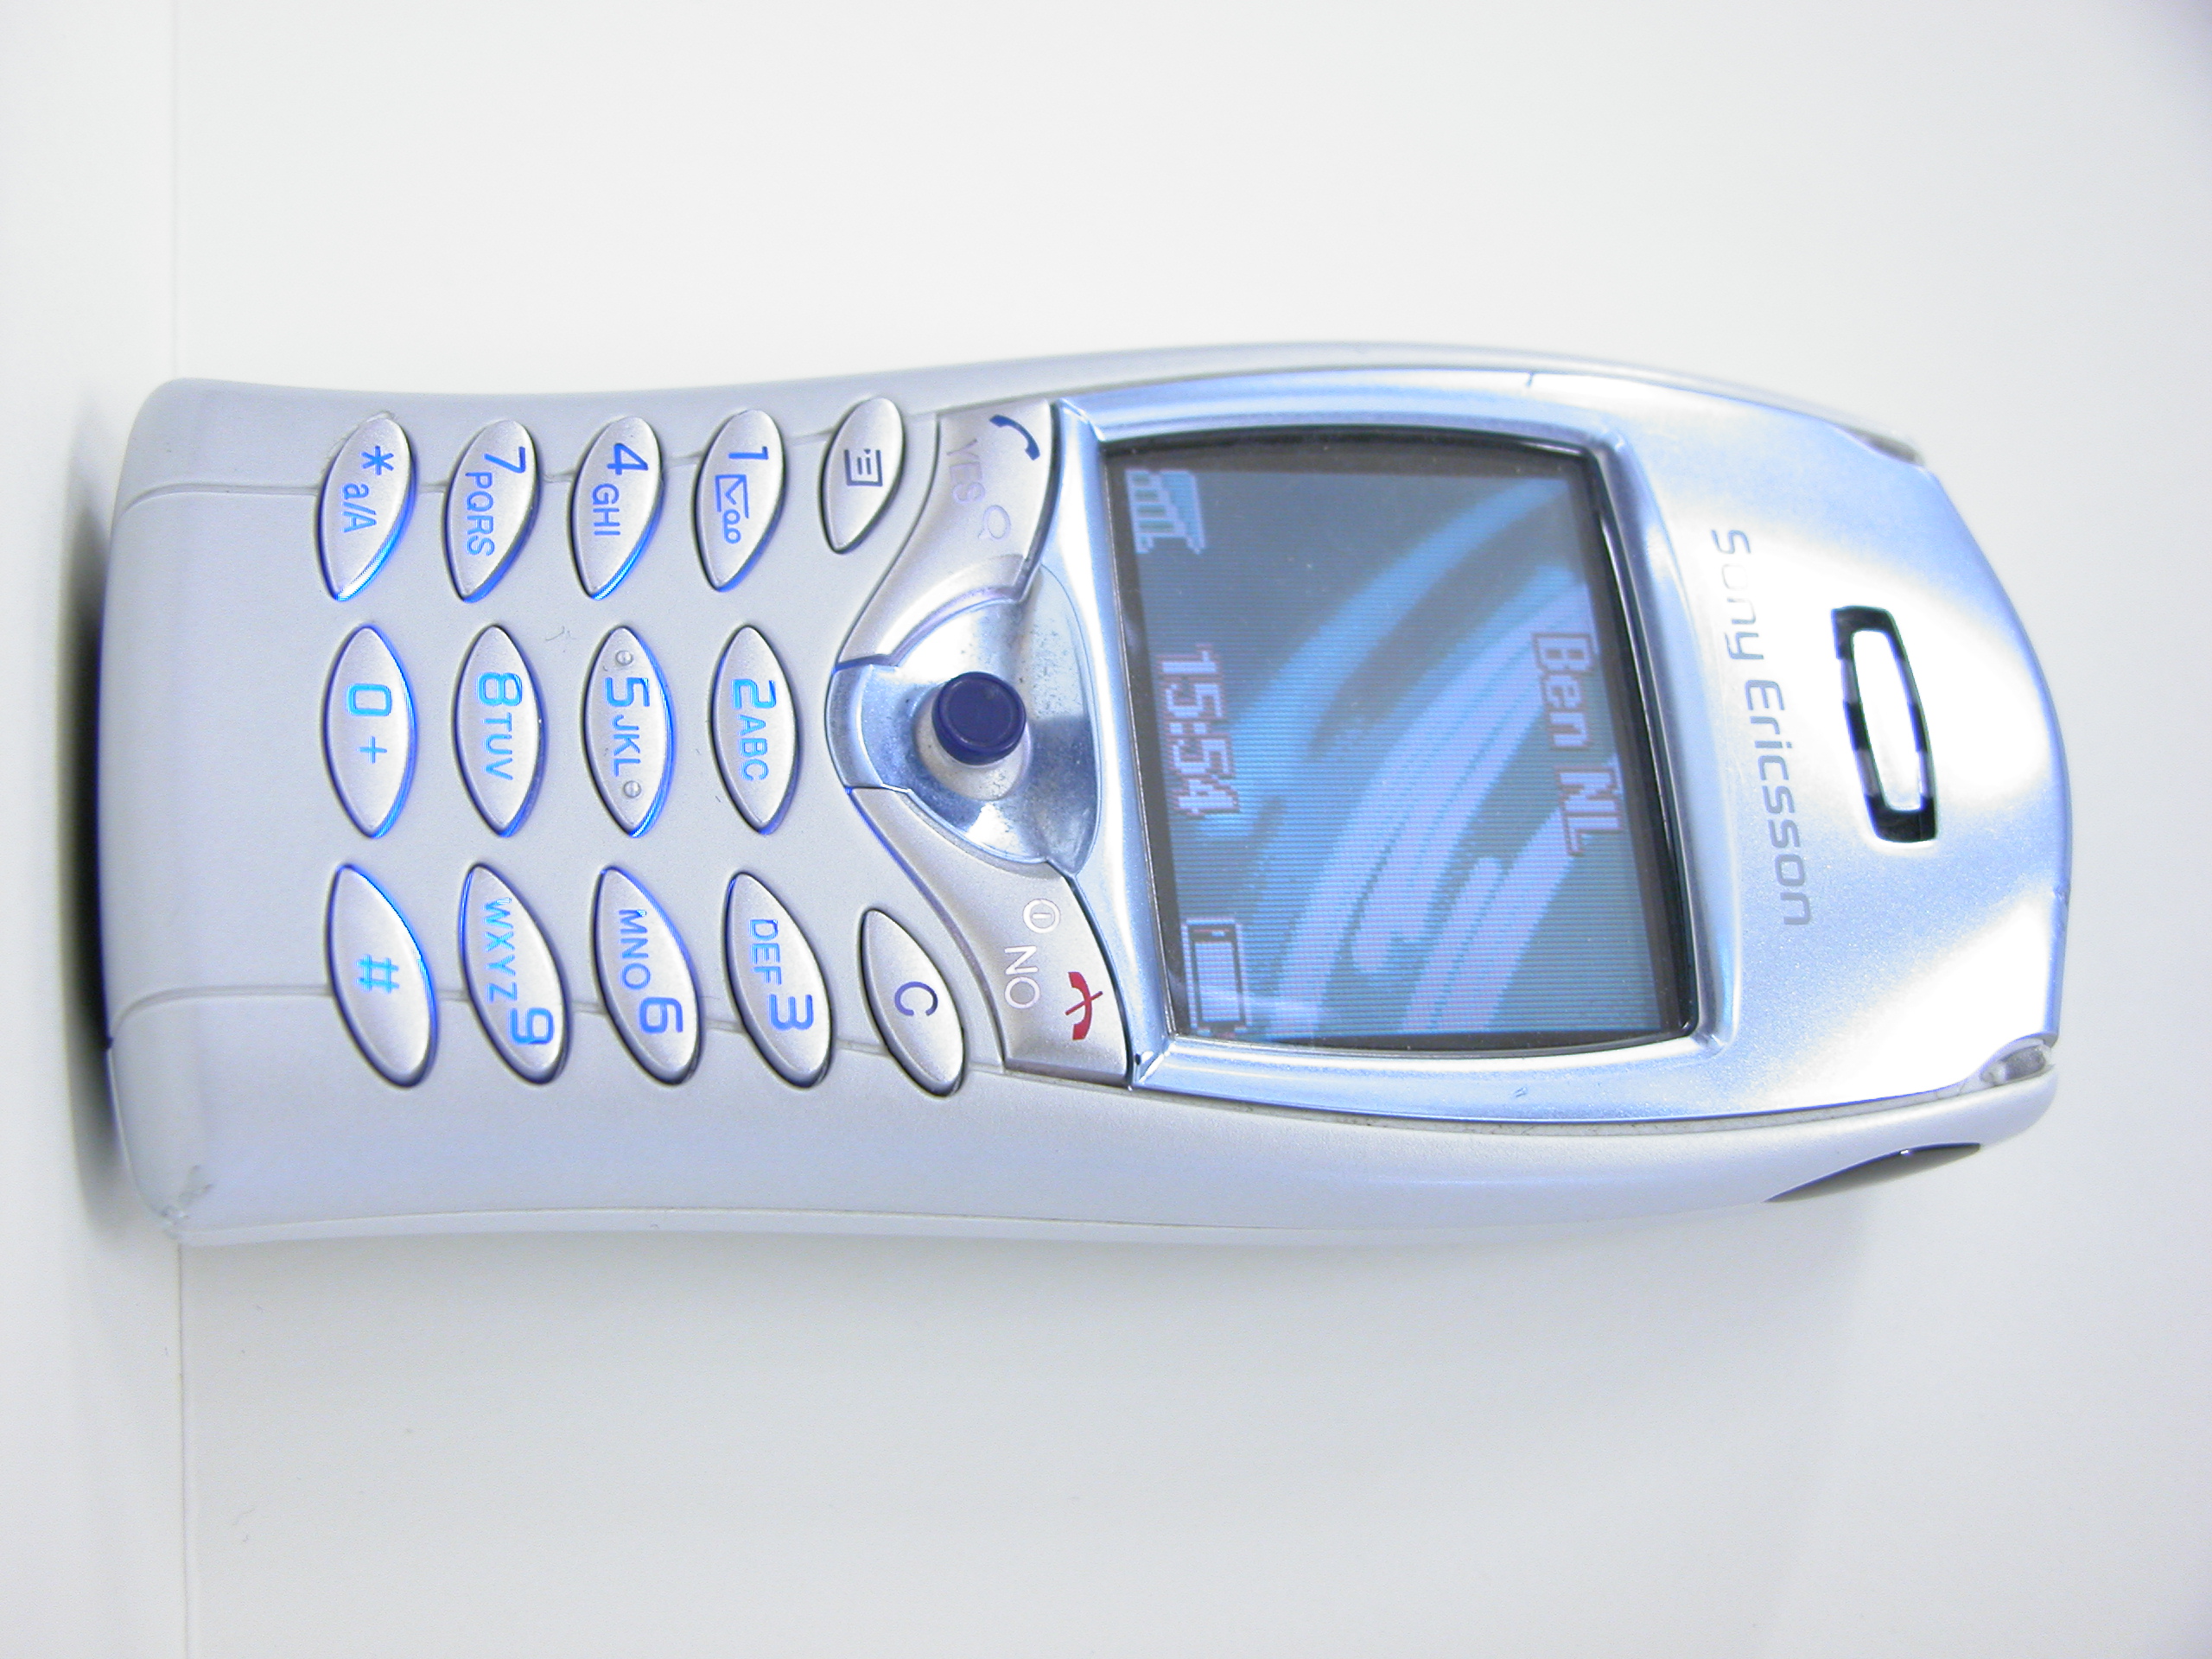 mobile phone white keys display sony ericsson blue shiny texture